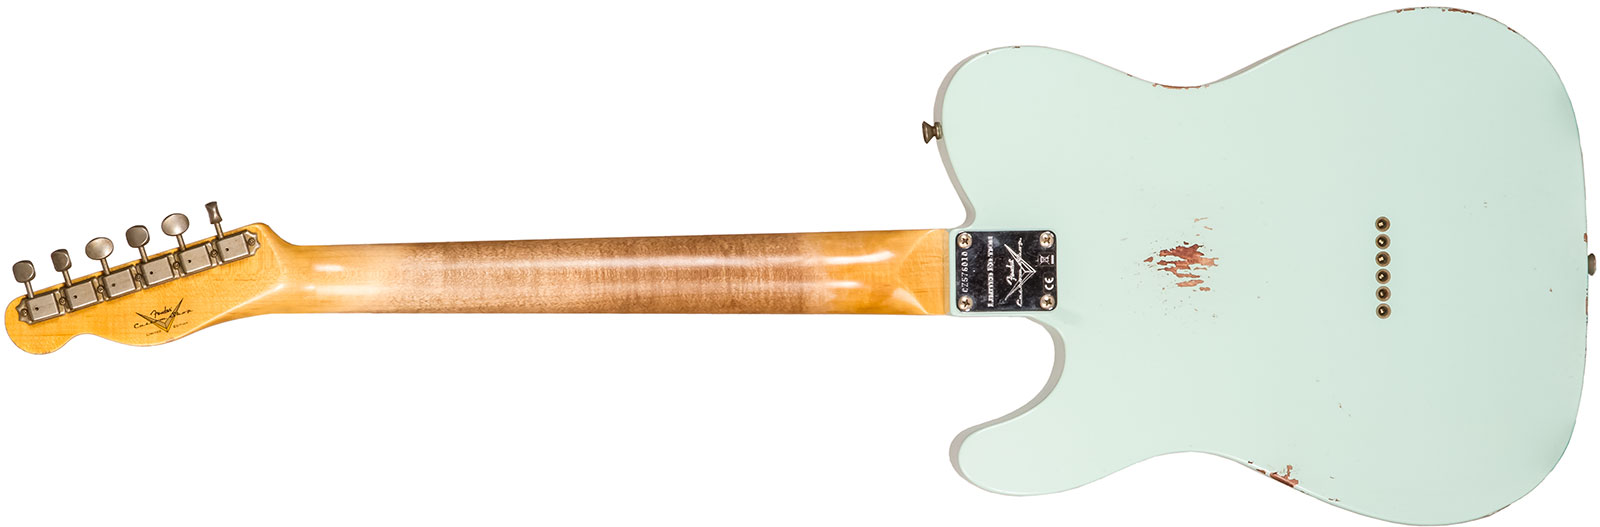 Fender Custom Shop Tele 1961 2s Ht Rw #cz576010 - Relic Aged Surf Green - E-Gitarre in Teleform - Variation 1